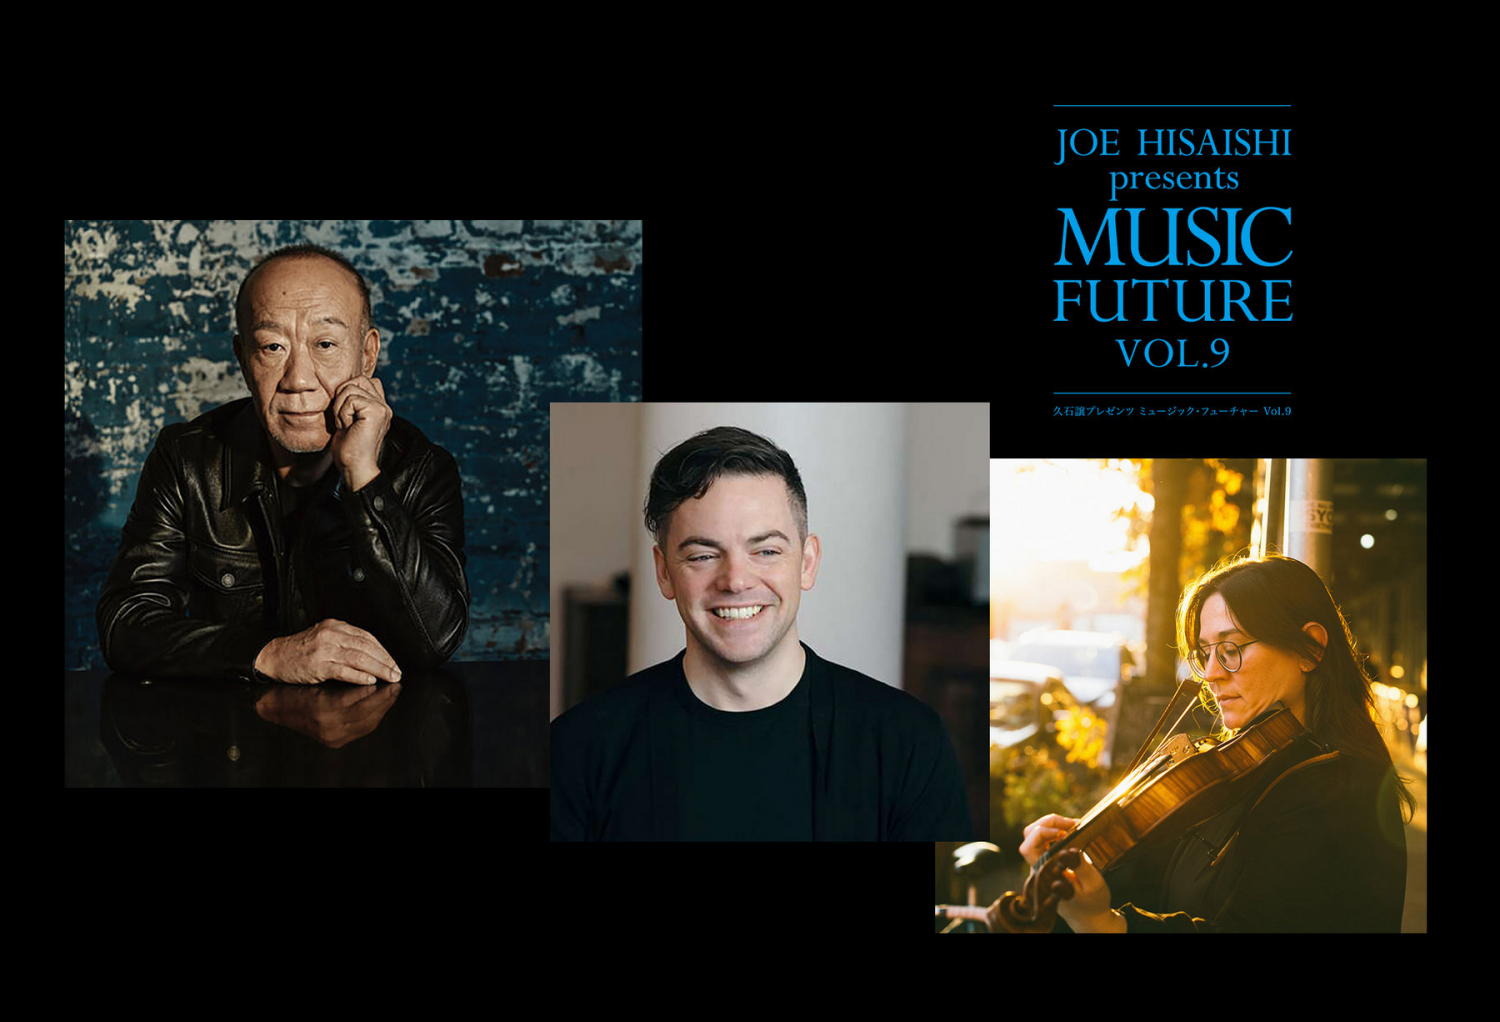 Joe Hisaishi Music Future Vol 9 Concerts in Tokyo & New York